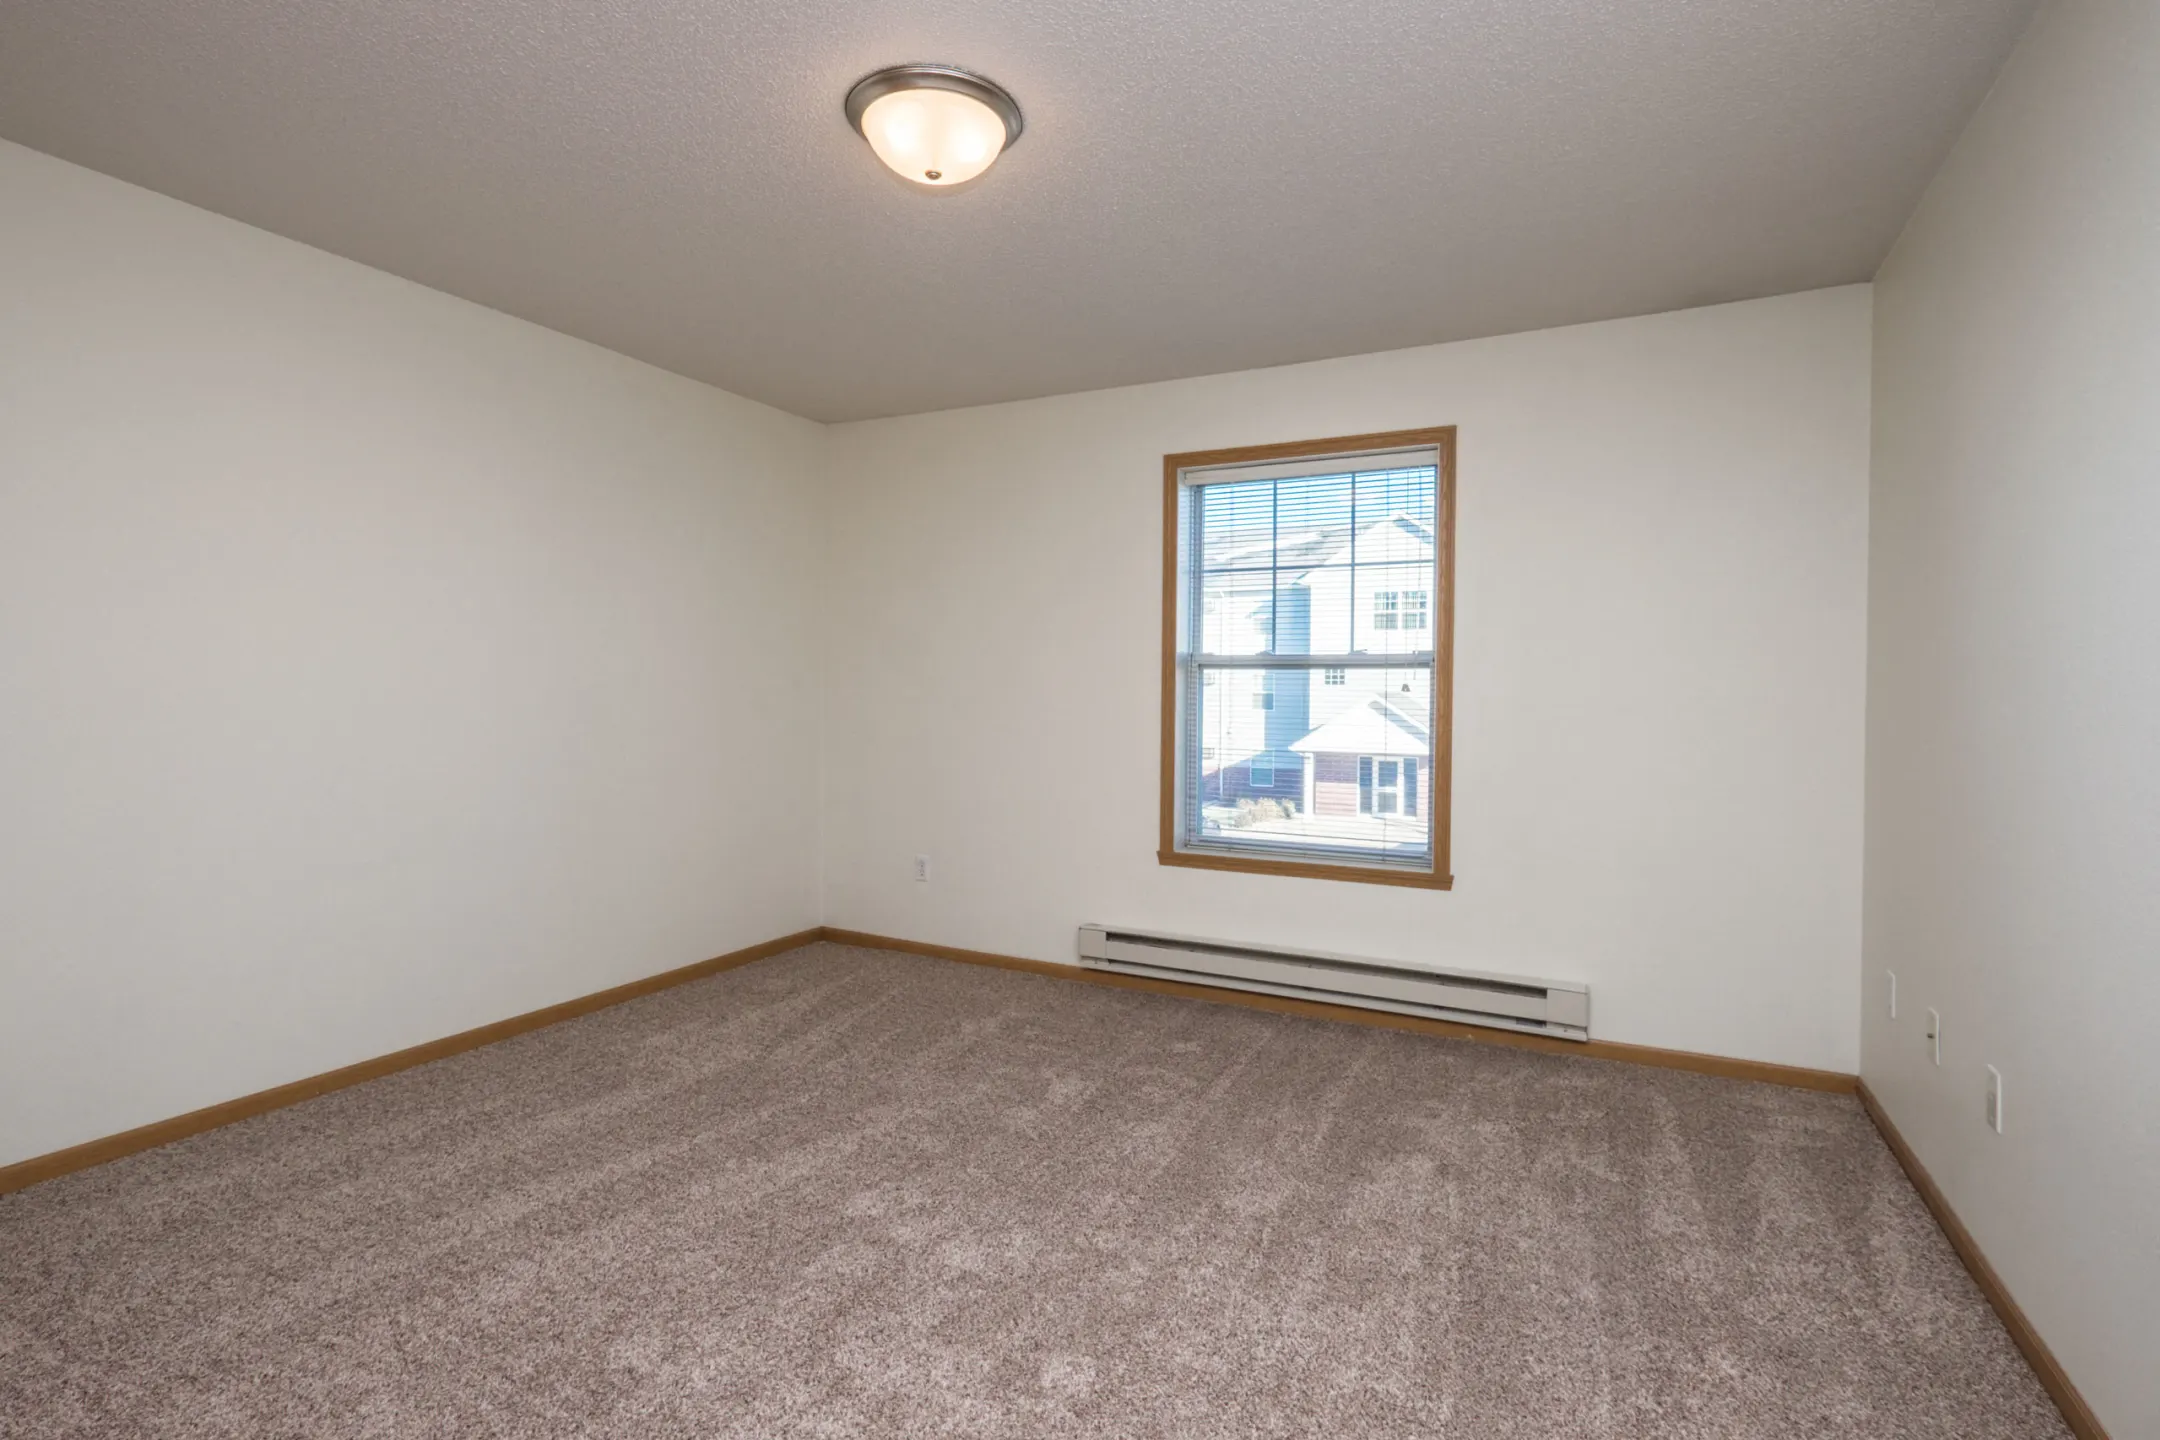 Bedroom - Stonebridge Apartments - Fargo, ND